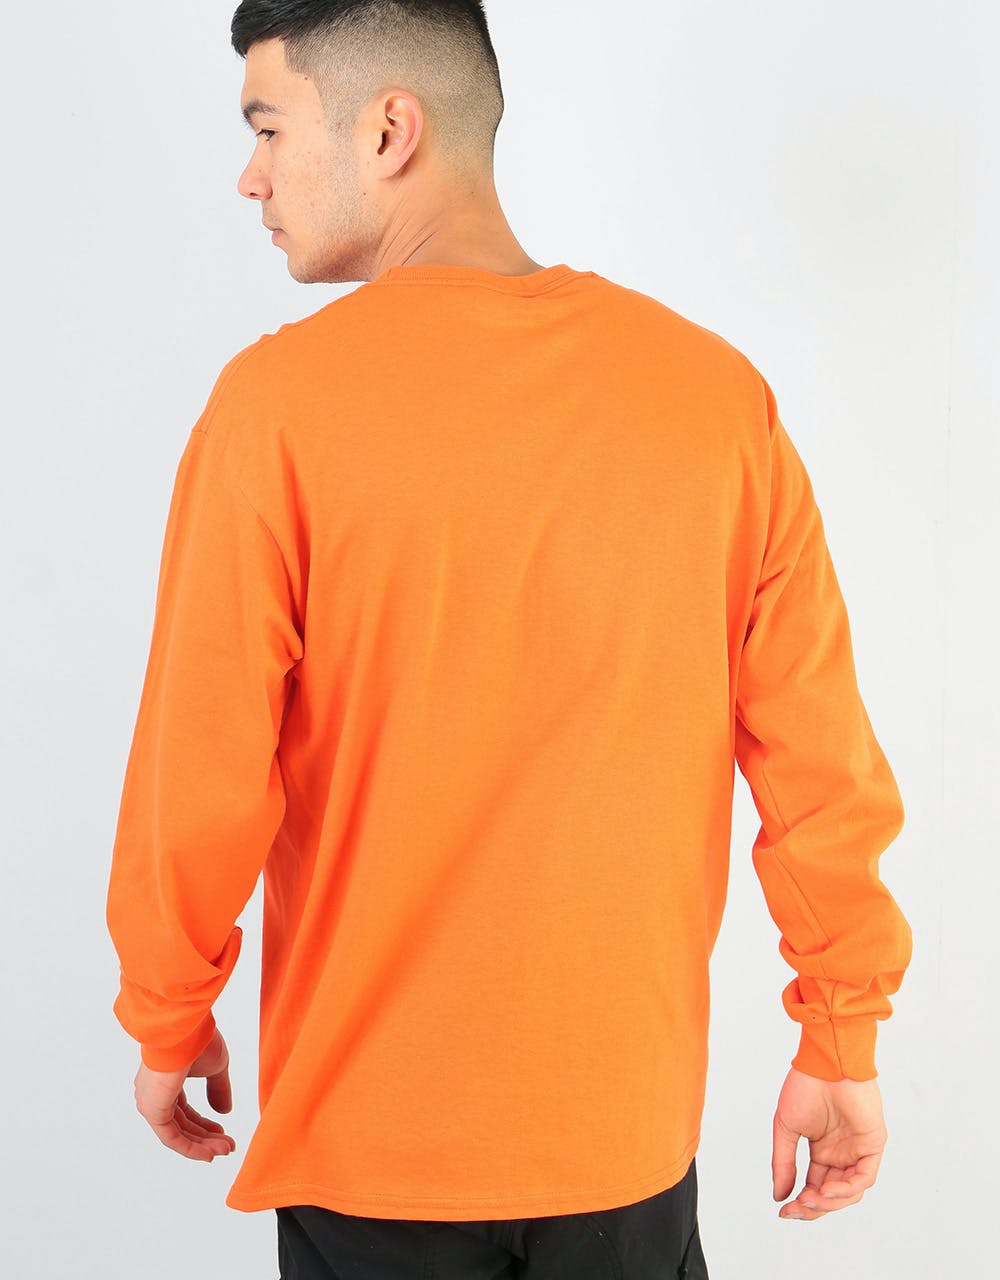 Route One Mirrors Edge Long Sleeve T-Shirt - Orange